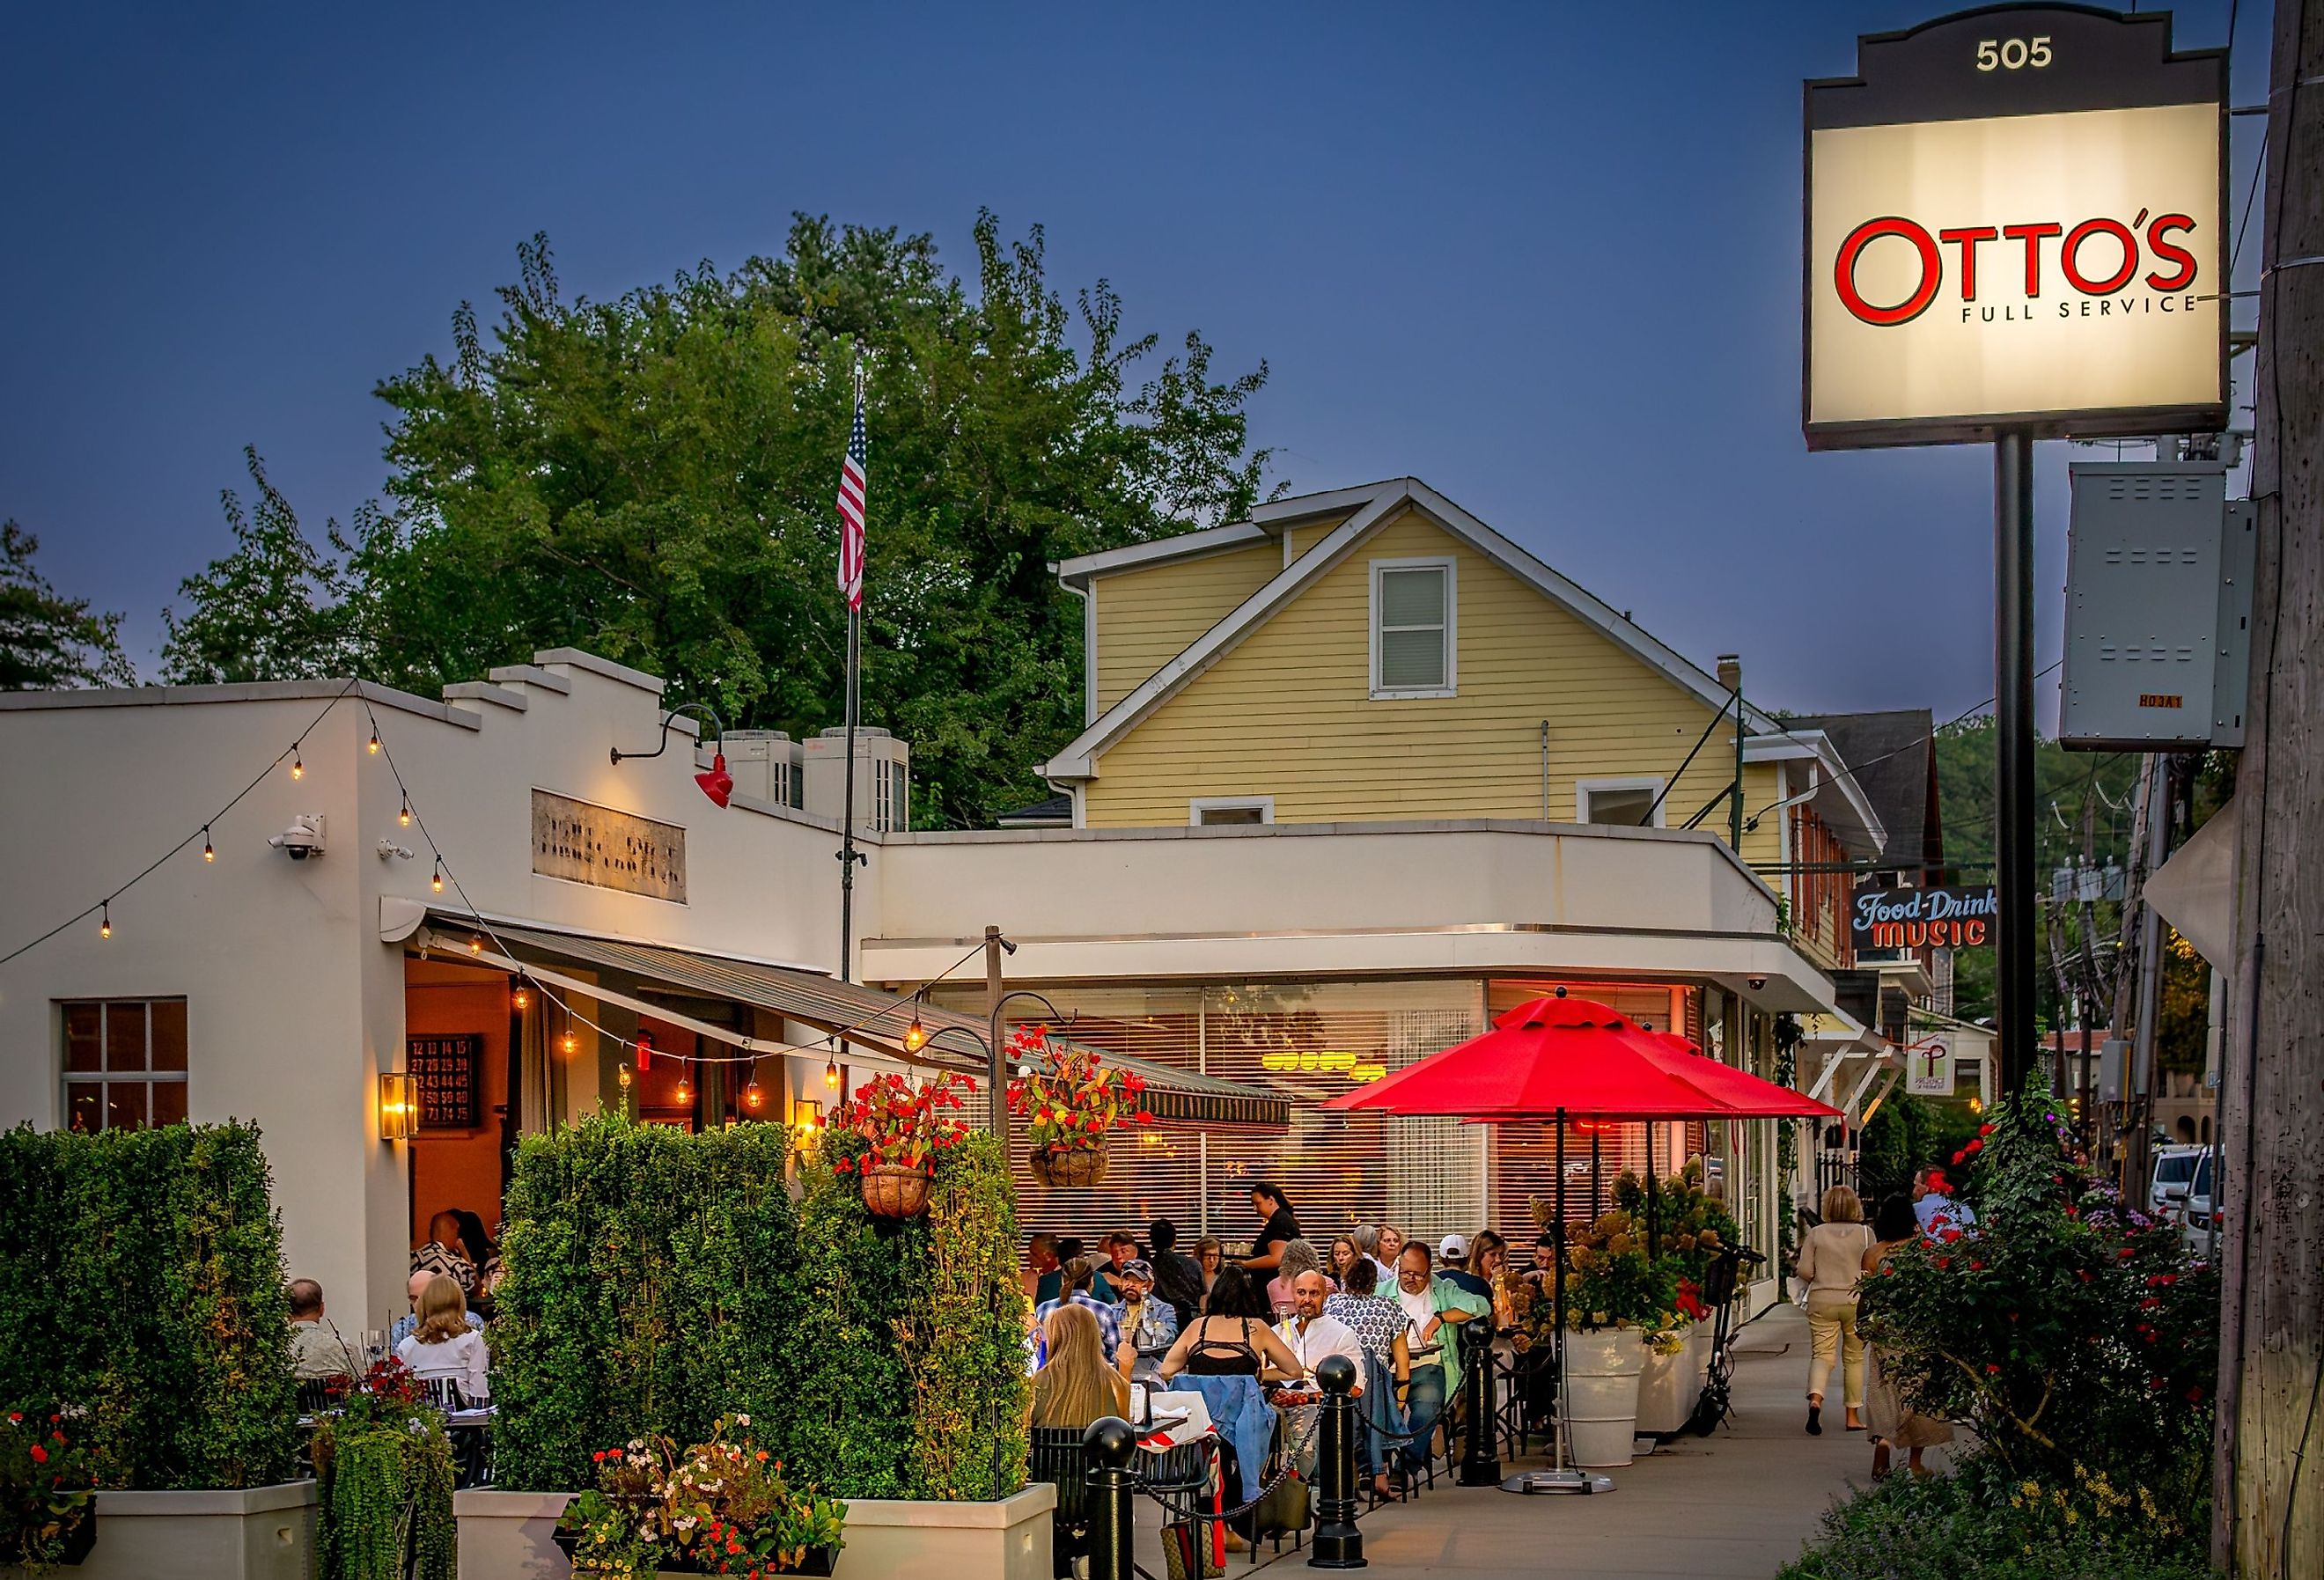 Otto's full-service American restaurant. Image credit Brian Logan Photography via Shutterstock.